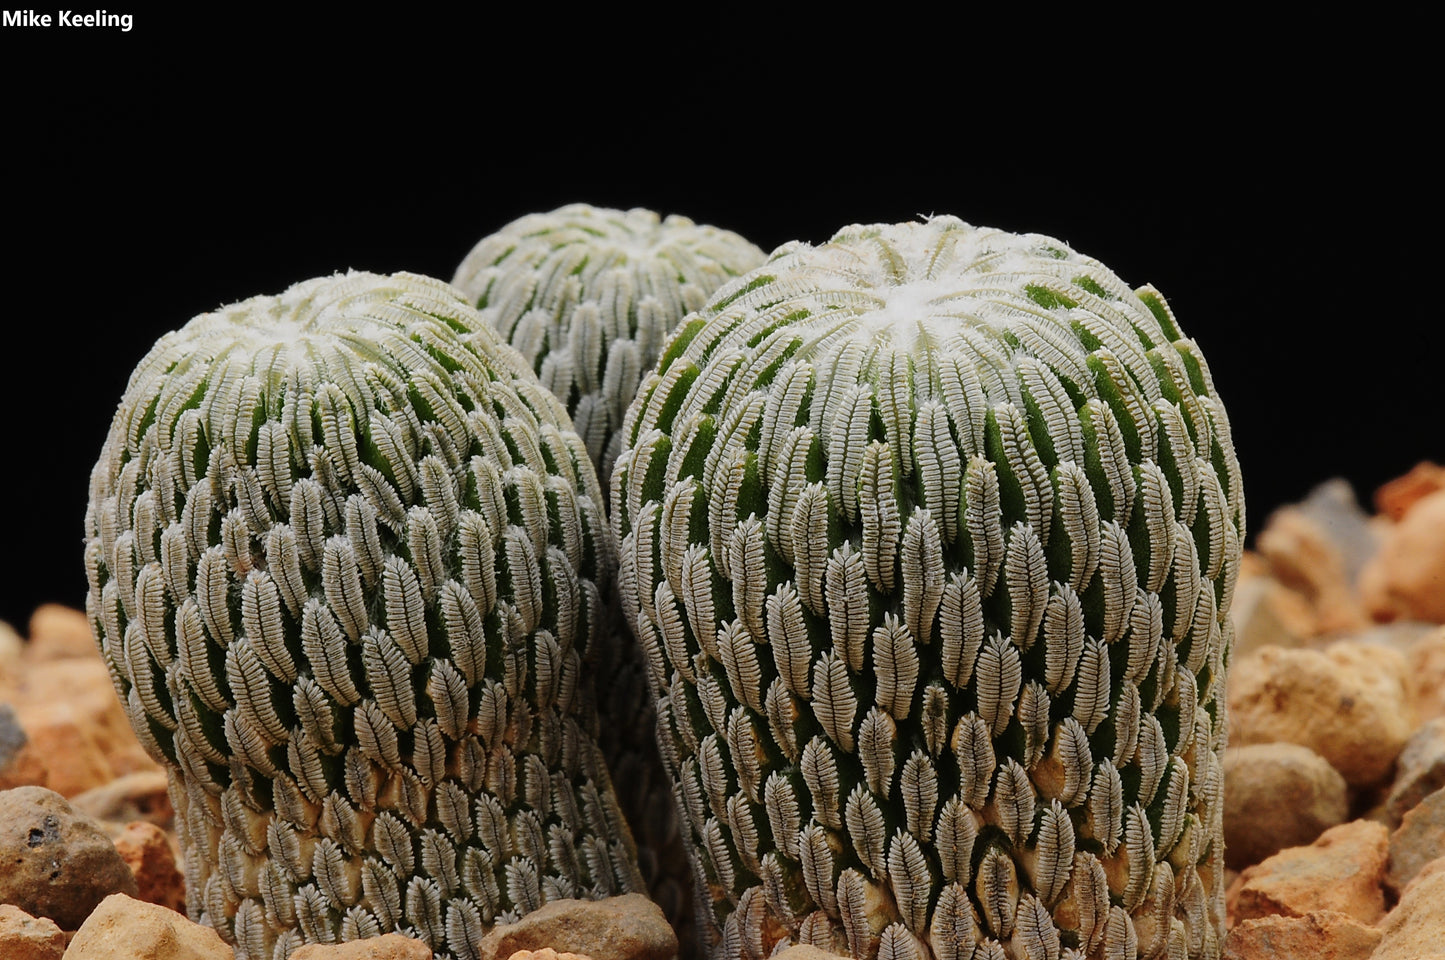 Pelecyphora Aselliformis - Hatchet Cactus - Peotillo - Peyotillo - 5 Fresh Seeds - VERY RARE